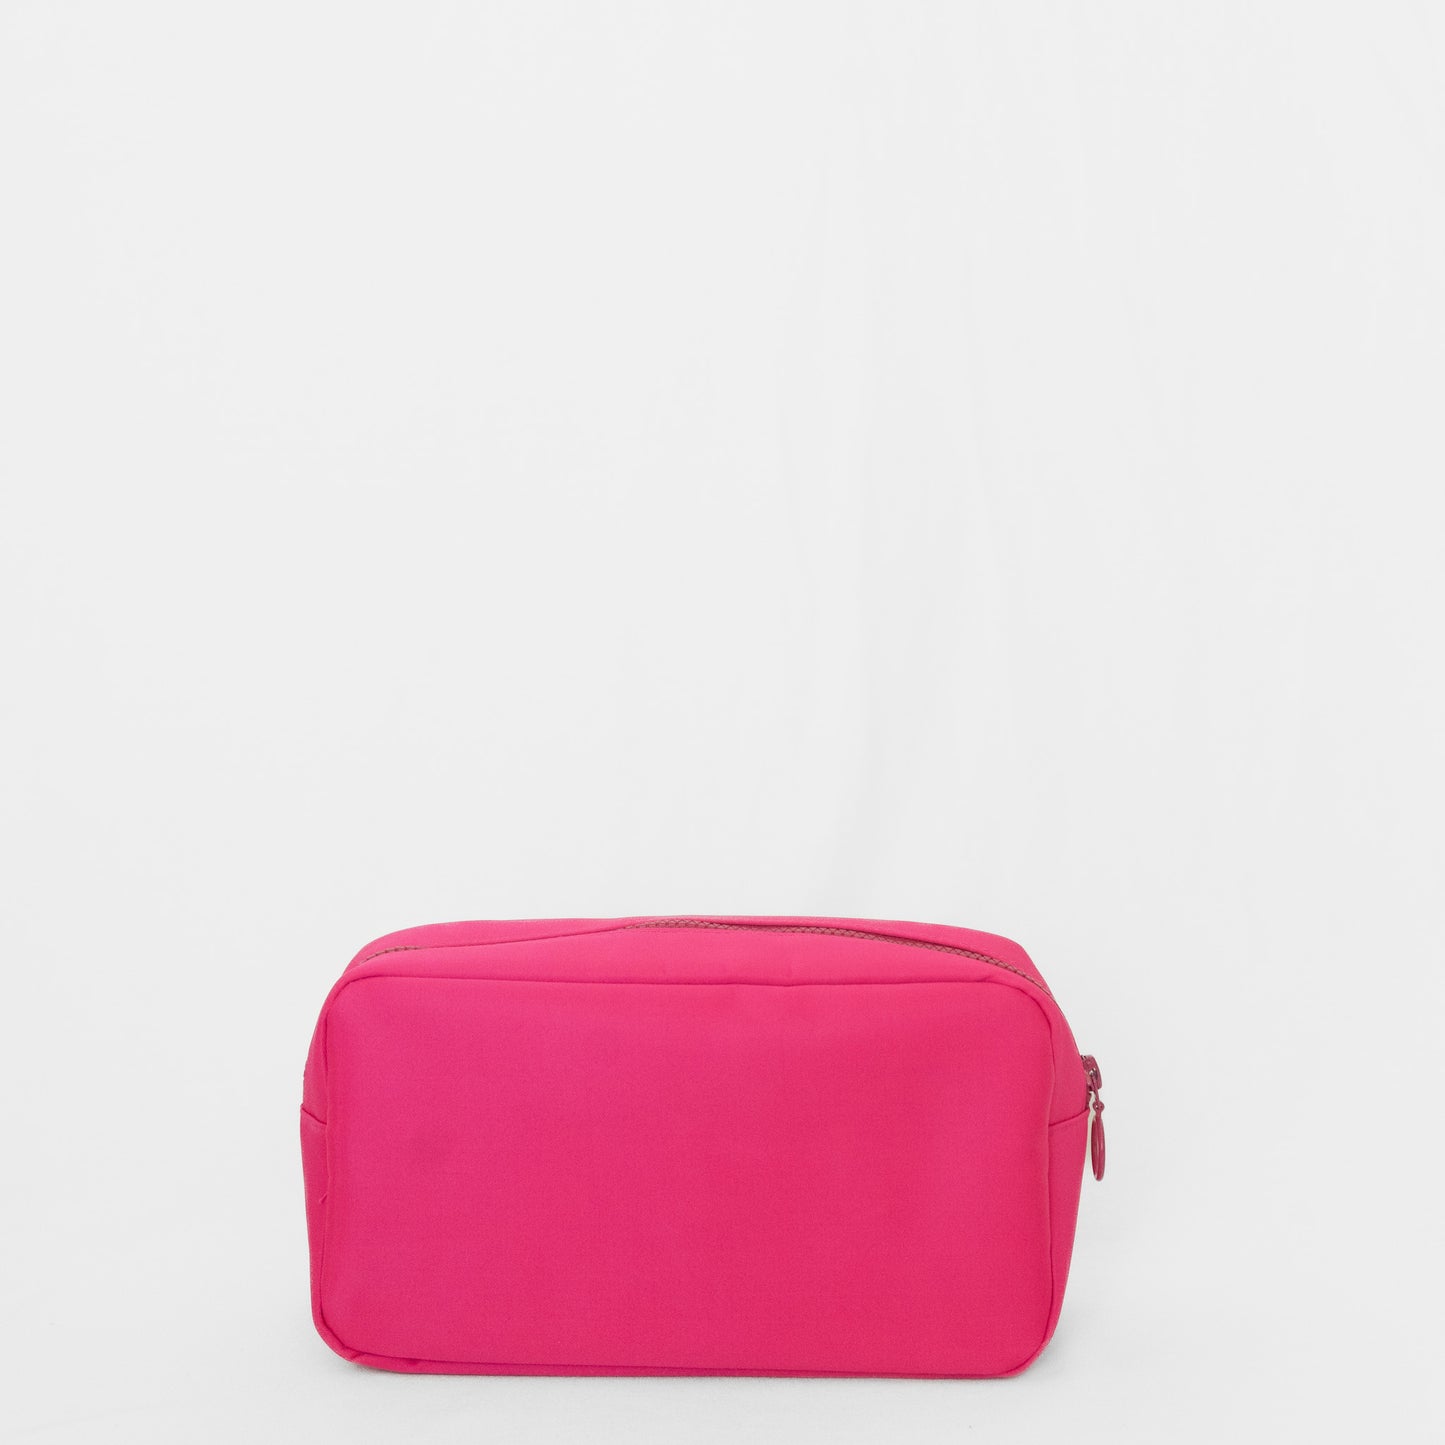 GW Essentials Nylon Pouch - Neon Pink - Give Wink